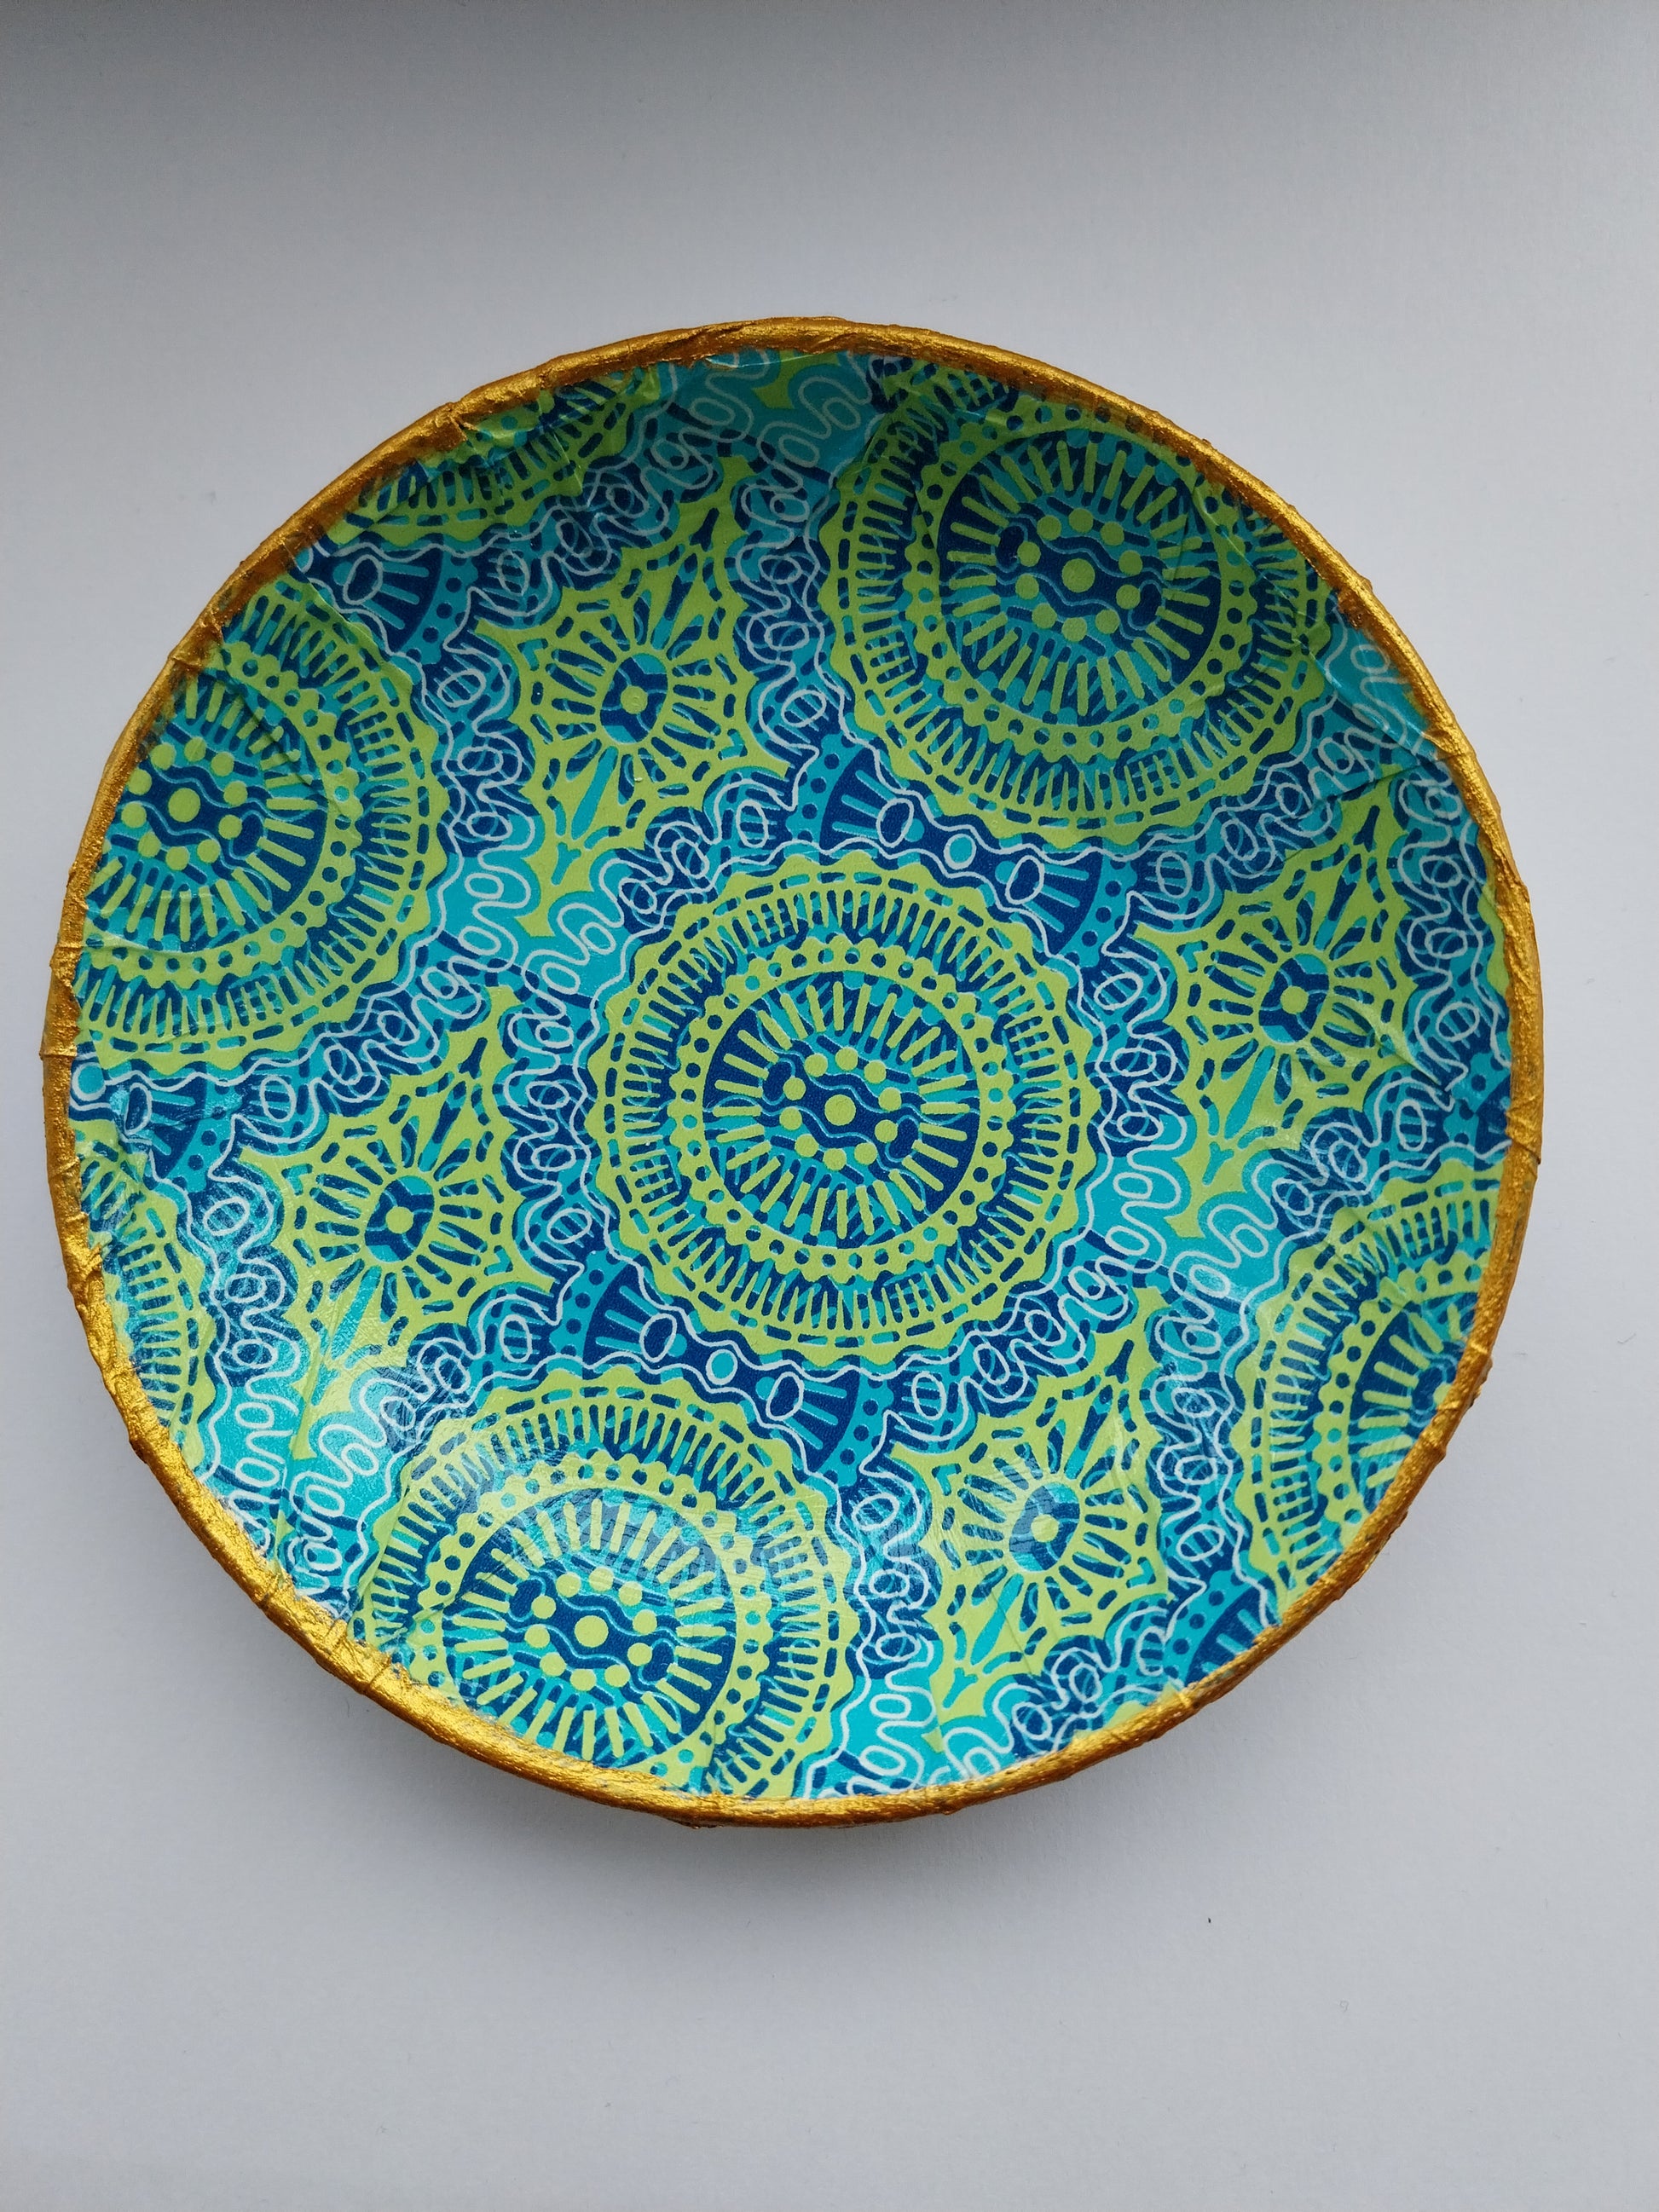 Arty Colourful Trinket Dish Large - design-eye-gallery